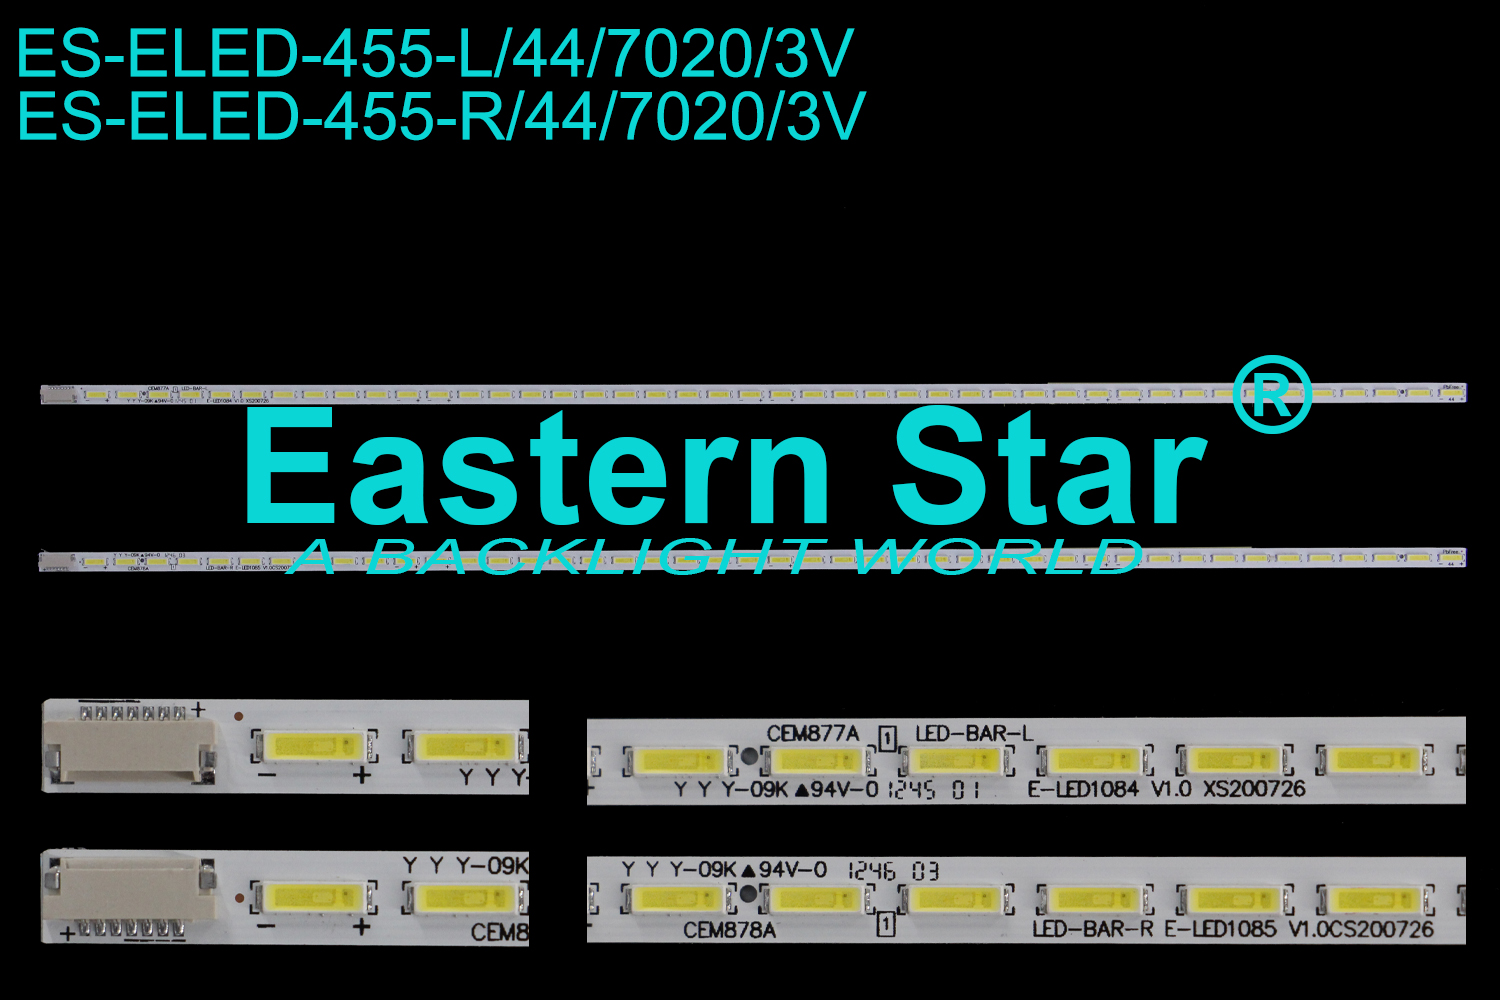 ES-ELED-455 ELED/EDGE TV backlight use for 39'' Sharp LC39LE440M L/R: CEM877A  LED-BAR-L/R LED STRIPS(2)